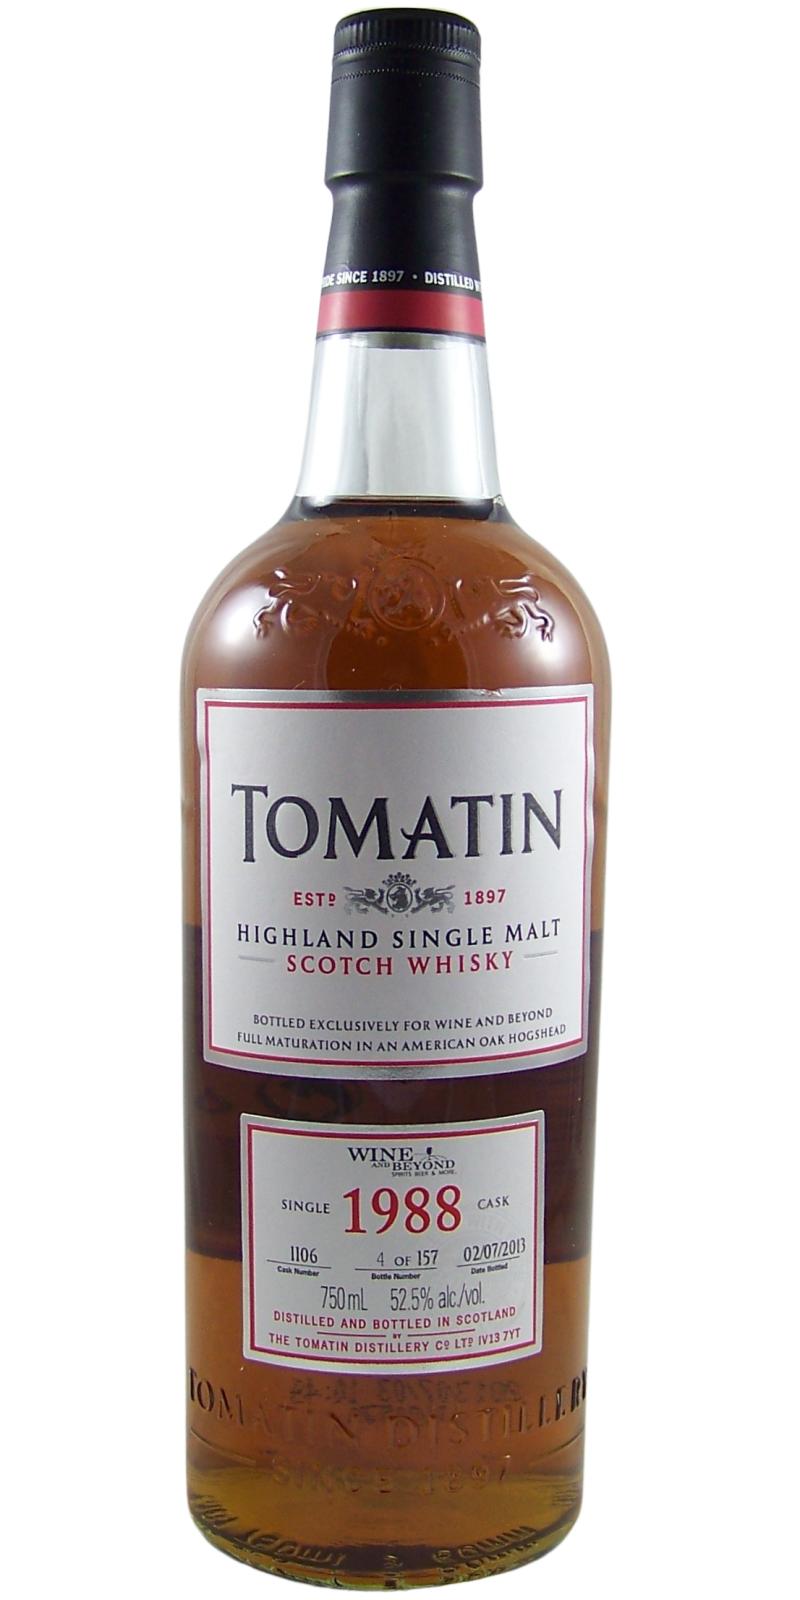 Tomatin 1988 American Oak Hogshead Wine & Beyond 52.5% 700ml